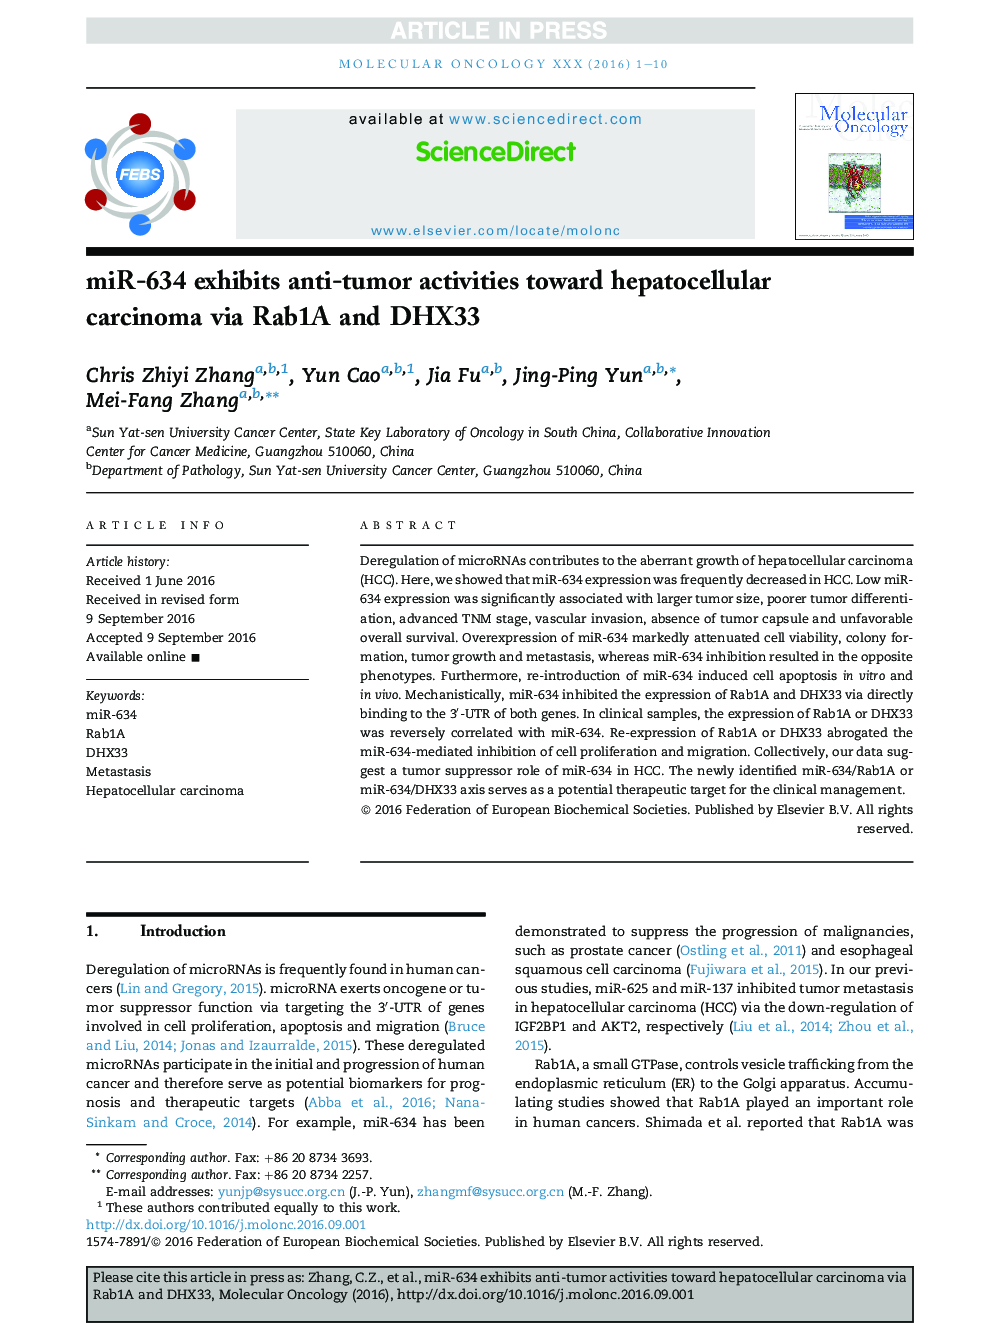 miR-634 exhibits anti-tumor activities toward hepatocellular carcinoma via Rab1A and DHX33